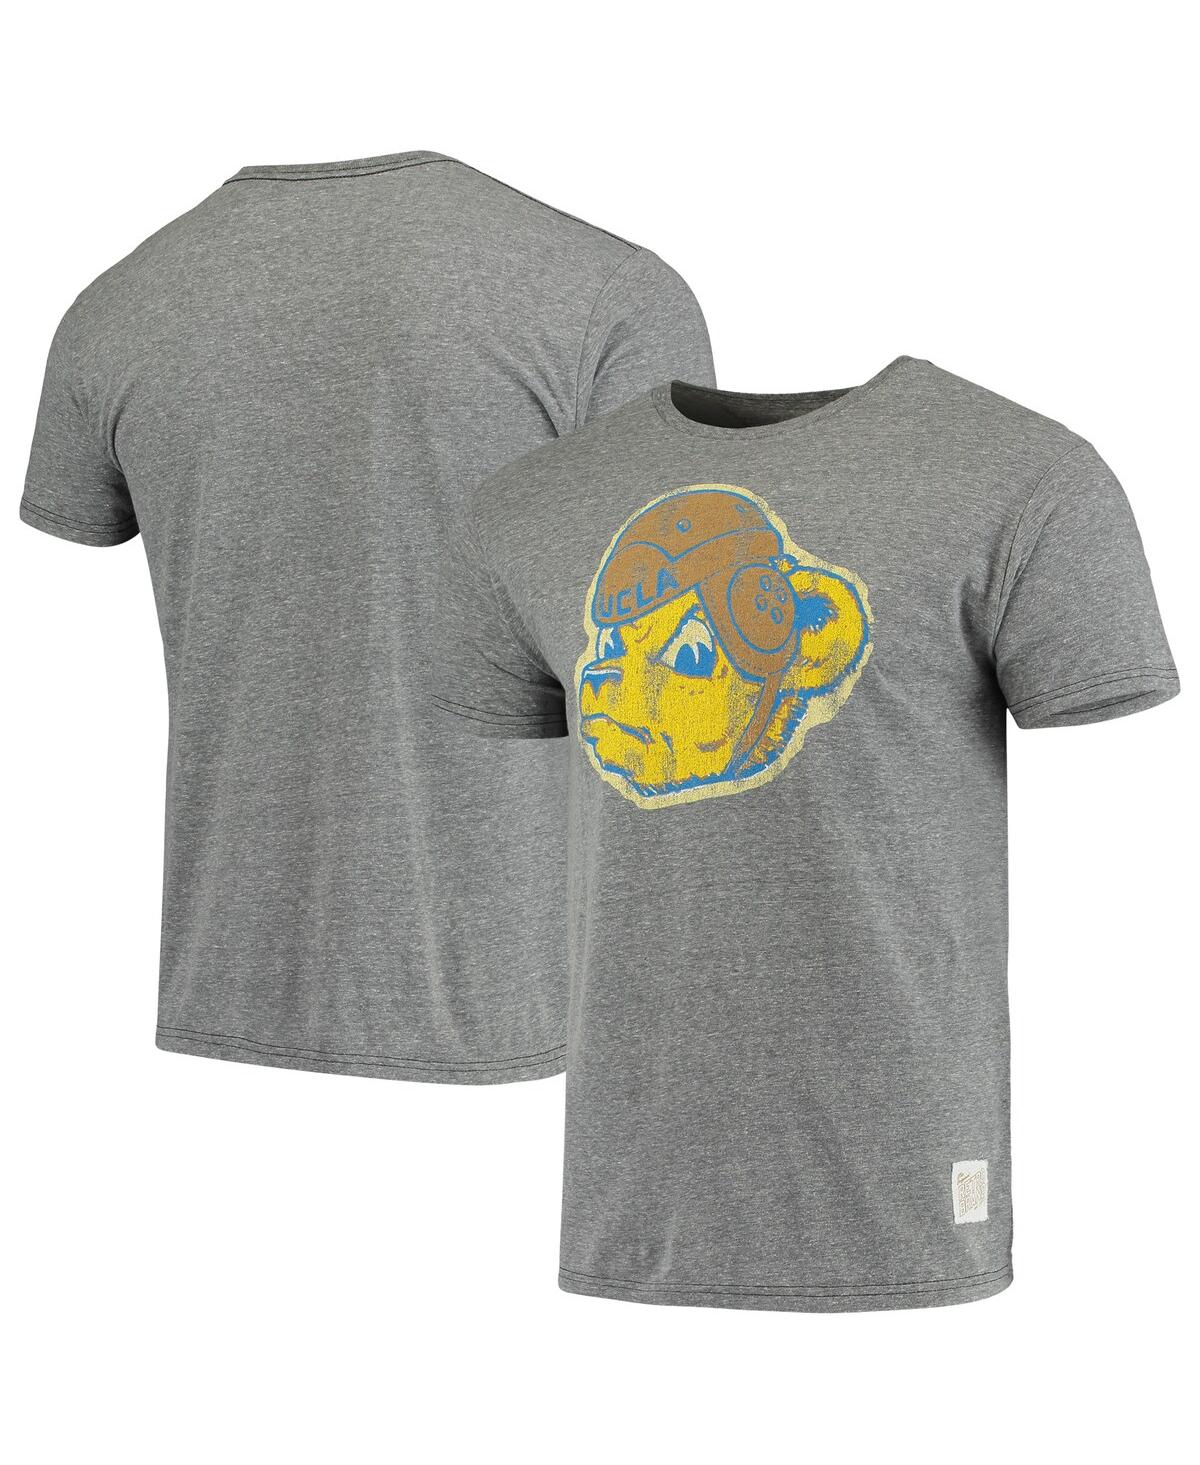 Men's Original Retro Brand Heathered Gray Ucla Bruins Vintage-Like Logo Tri-Blend T-shirt - Heathered Gray